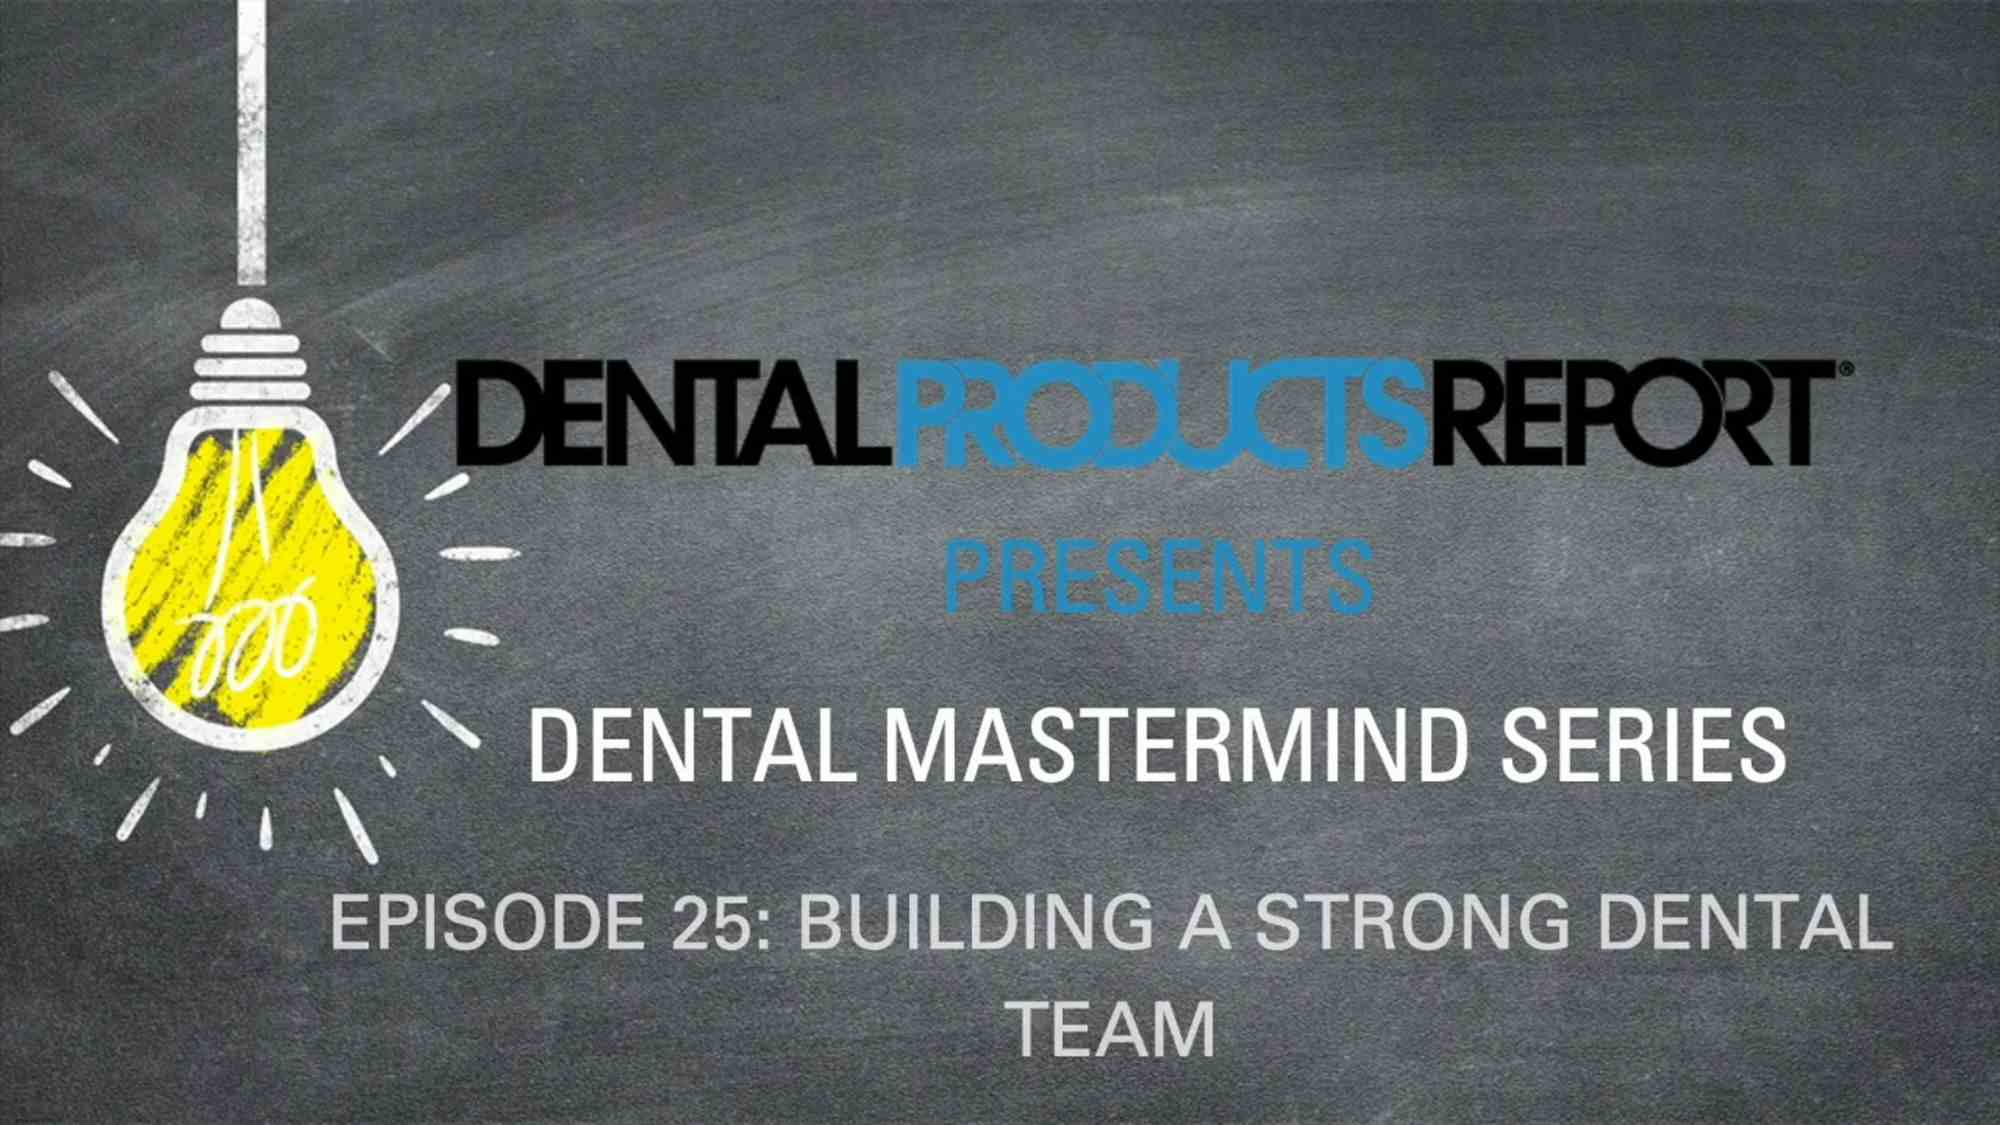 Mastermind - Episode 25 - Building a Strong Dental Team